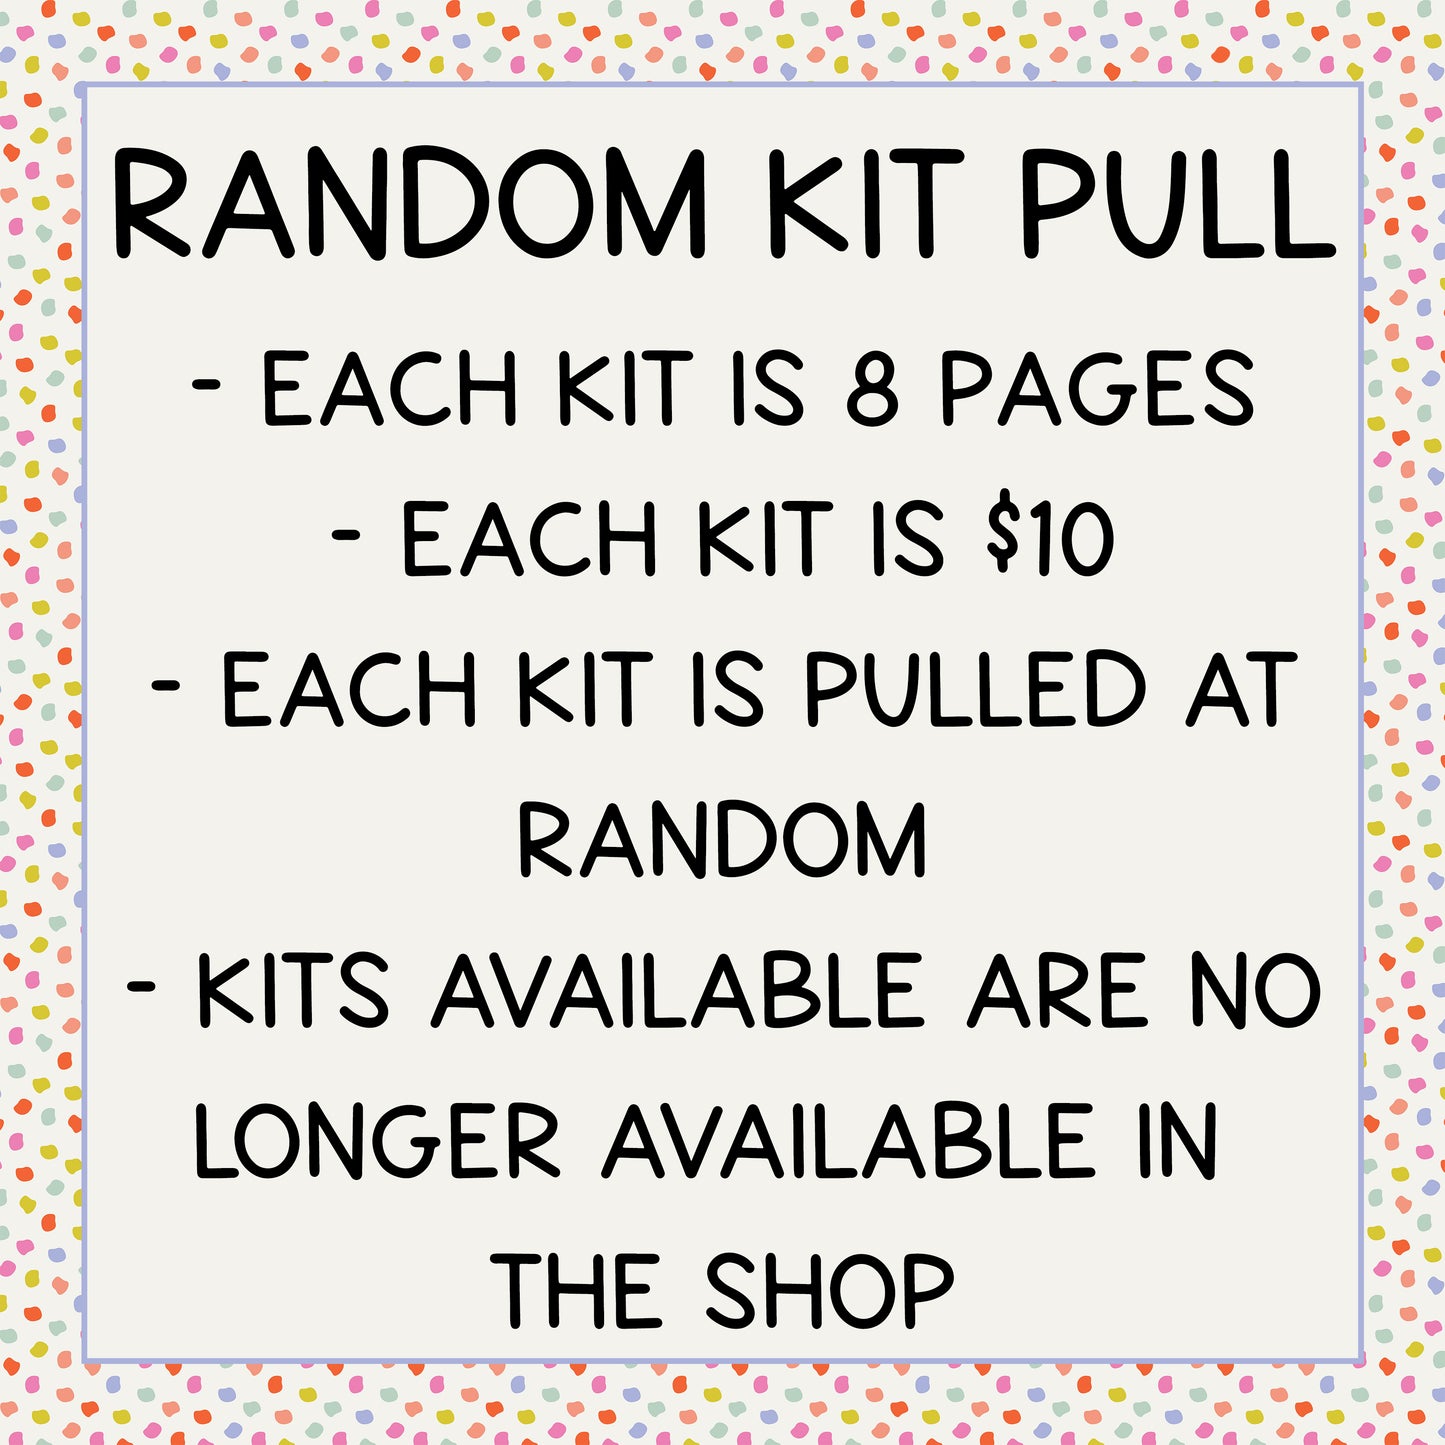 Random Kit Pull